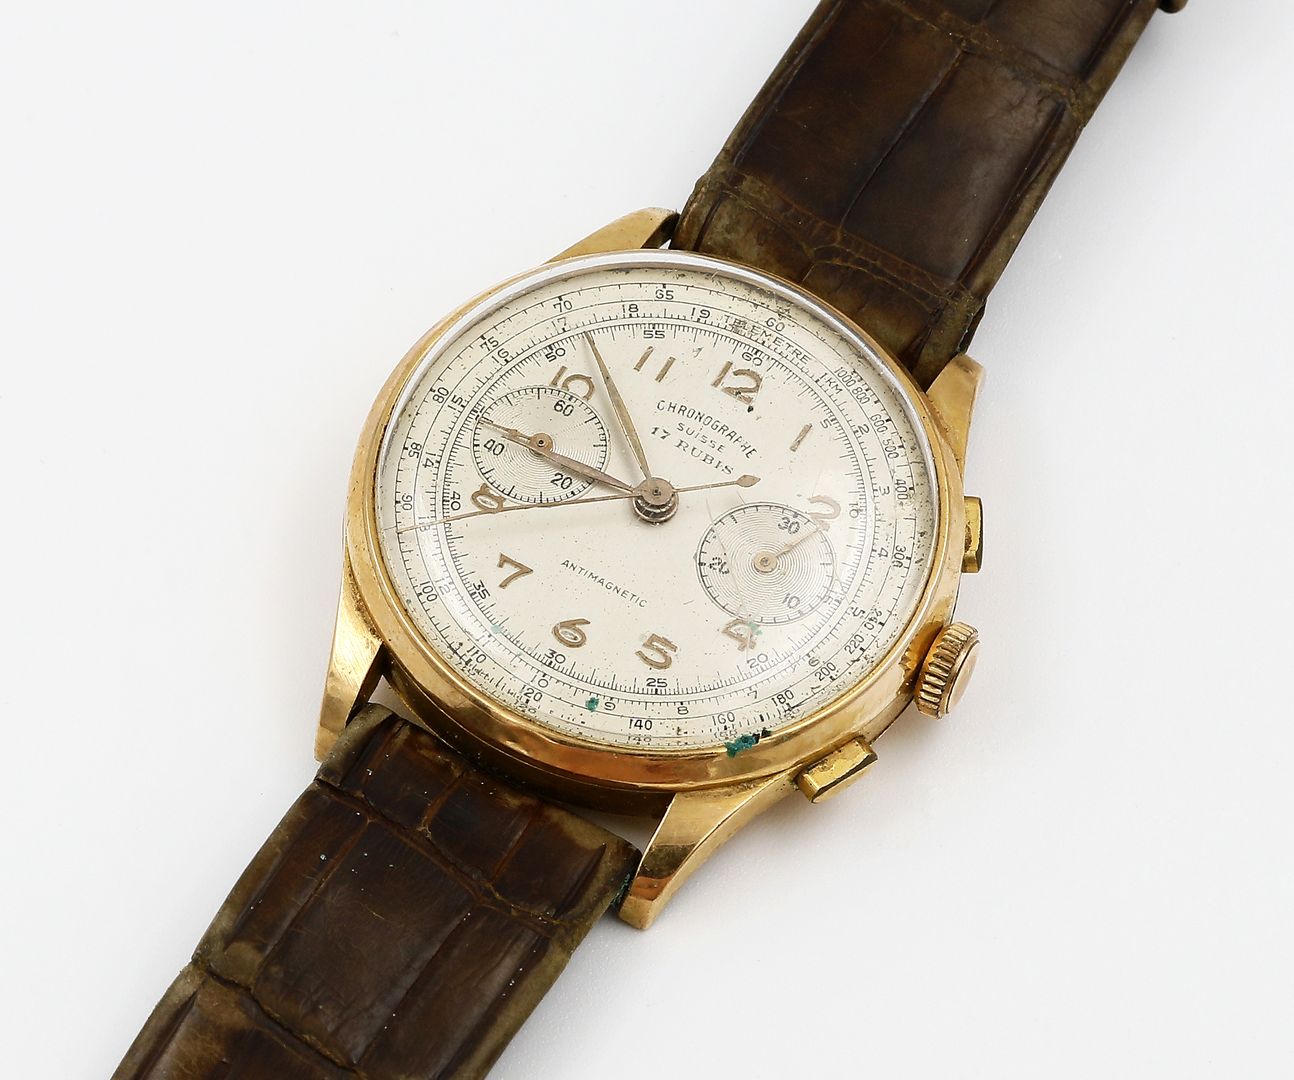 Herren-Armbandchronograph "Chronograph Suisse".